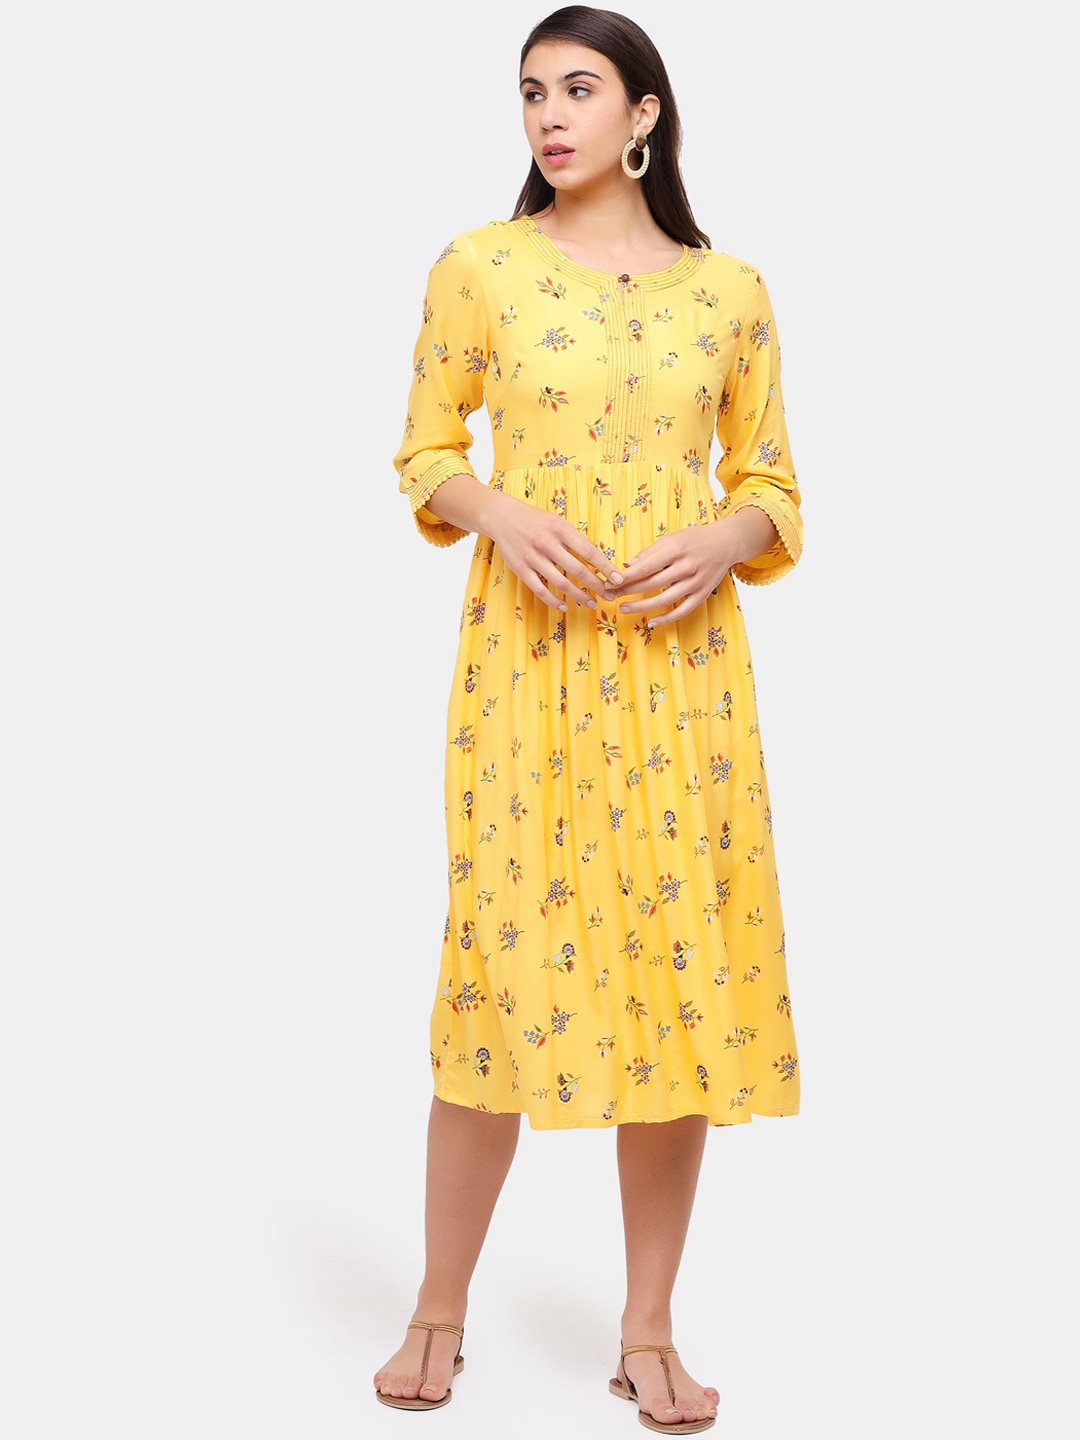 IMARA Yellow Floral Midi Dress Price in India